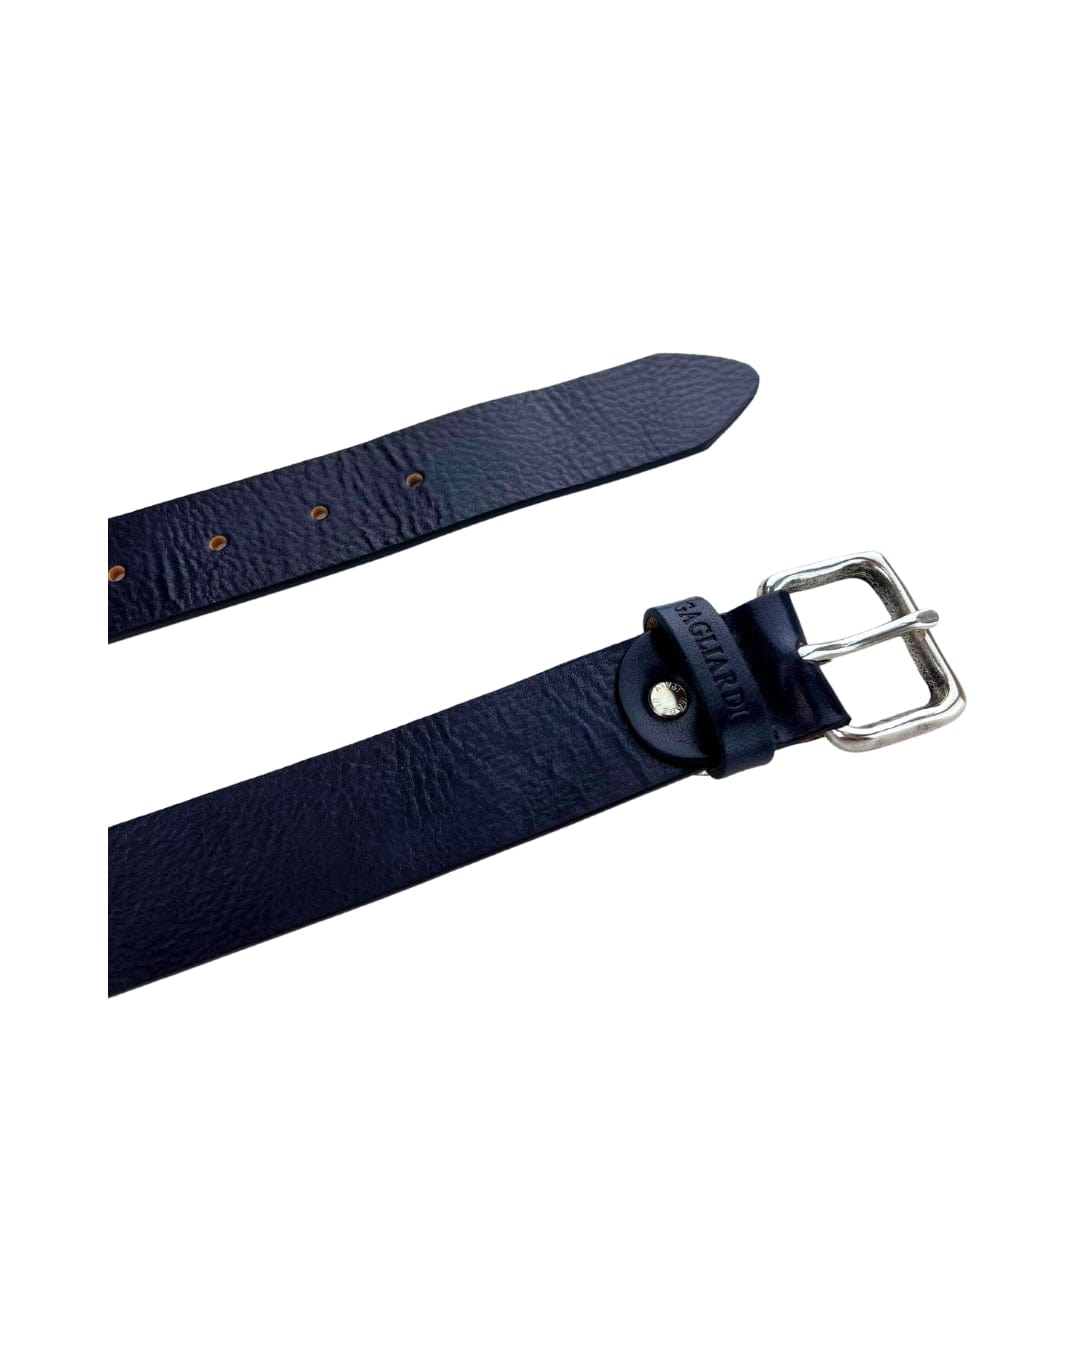 Gagliardi Belts Gagliardi Tamponato Italian Leather Belt